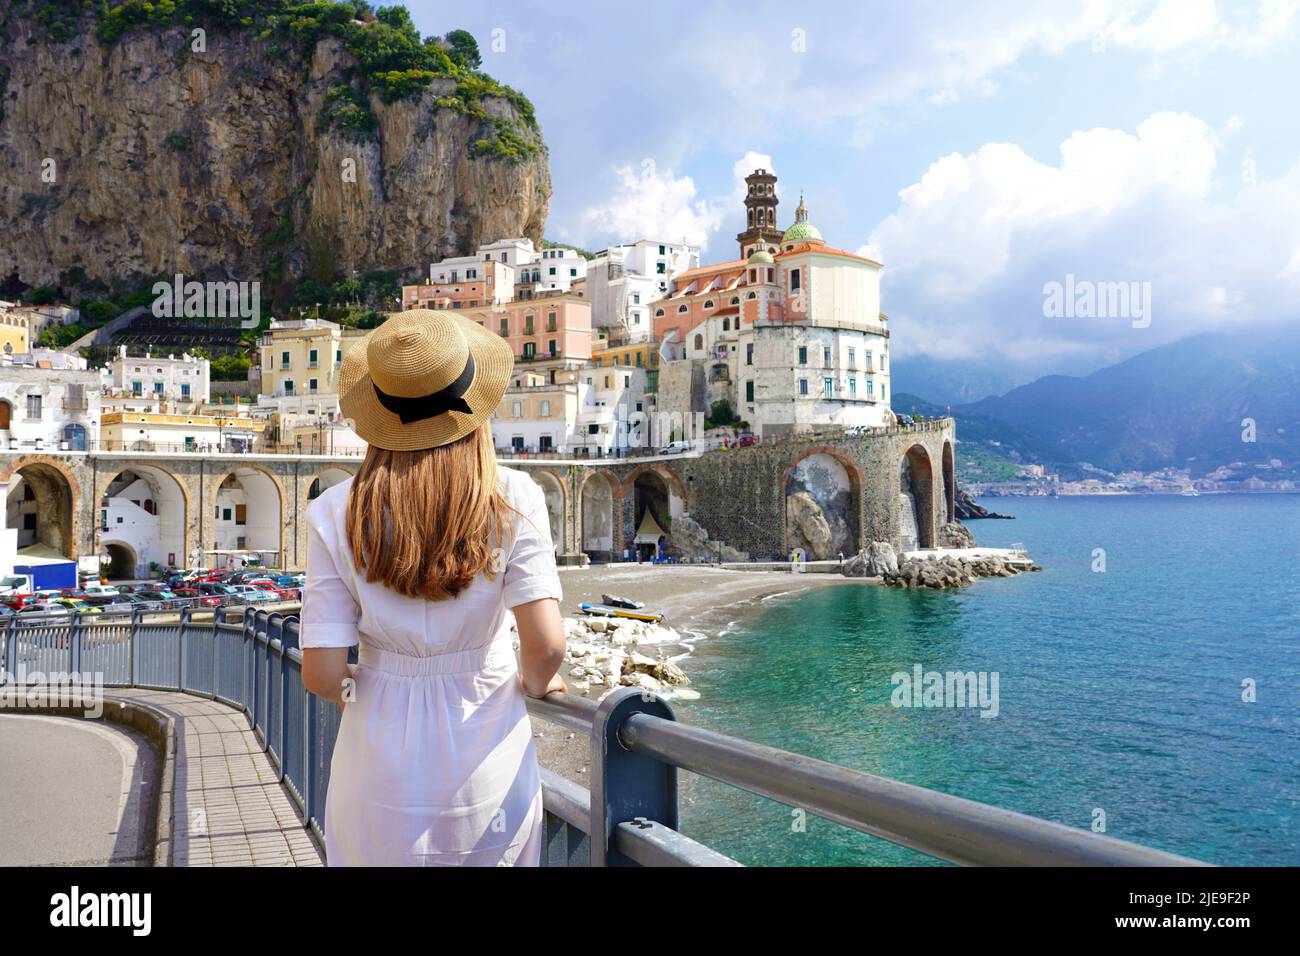 Italian Beauty Scenery. Back view of young woman with straw hat and white dress walking to Atrani village, Amalfi Coast, Italy. Stock Photo